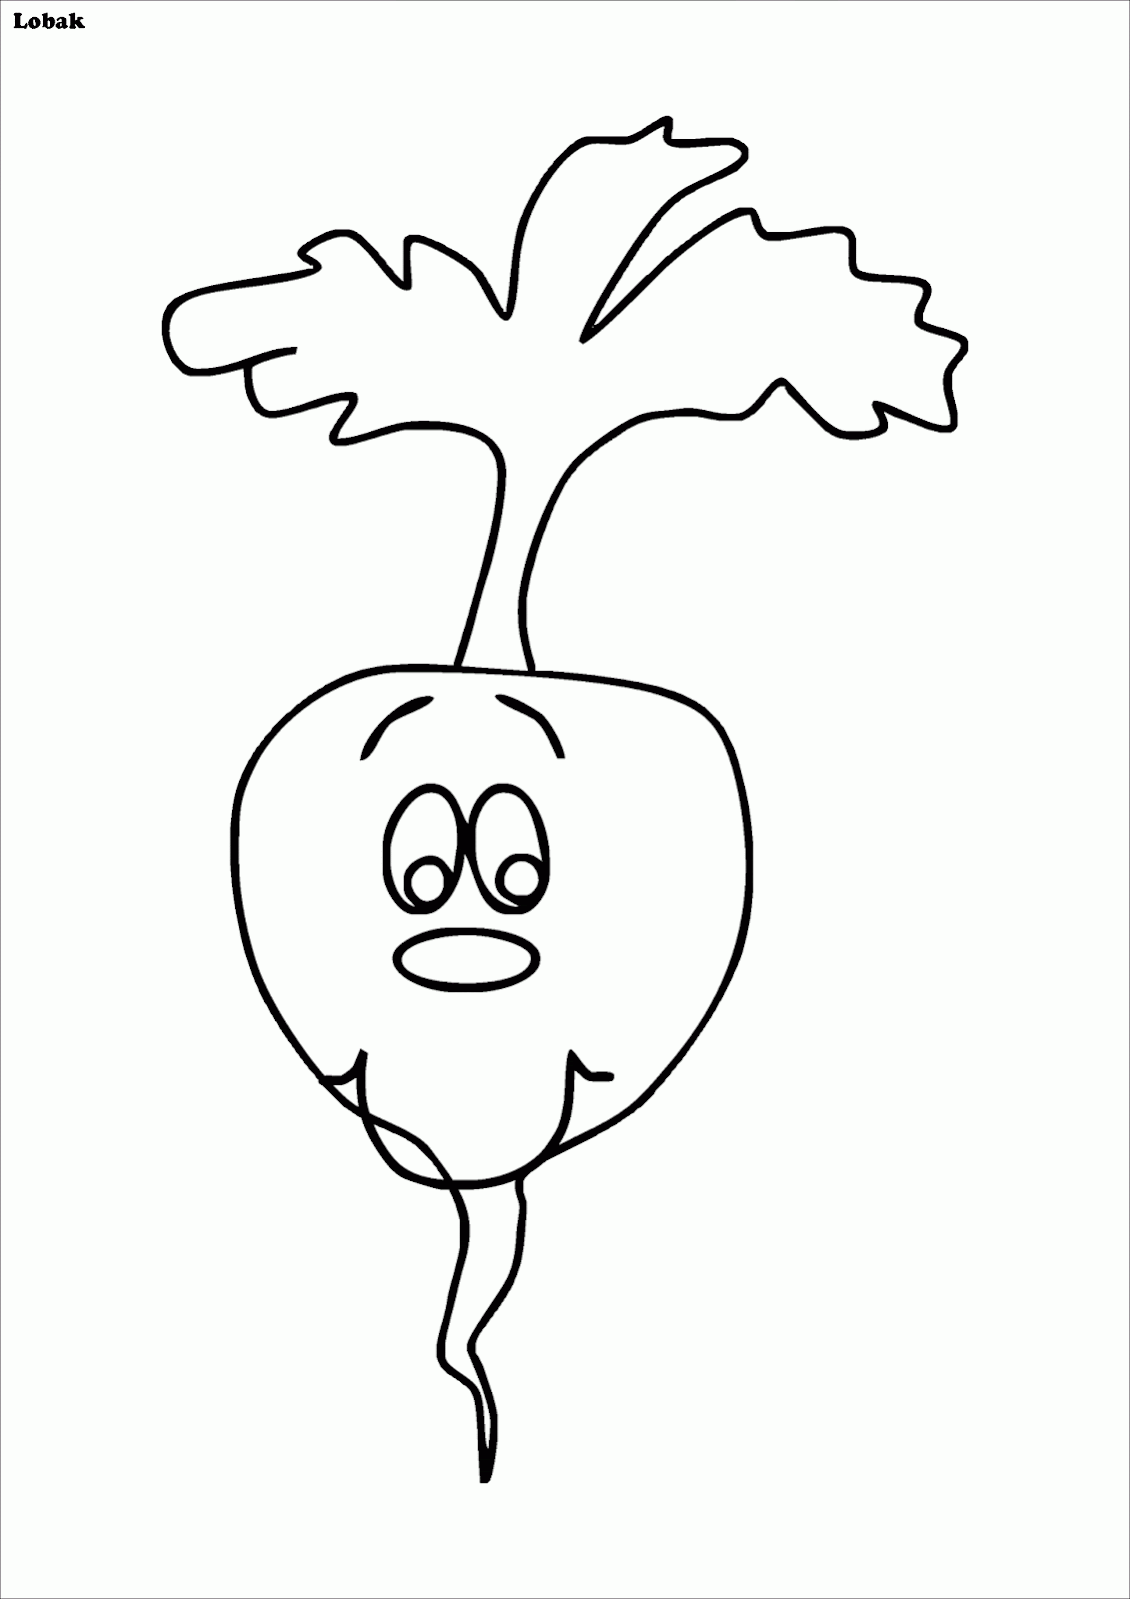 Gambar Mewarnai Sayur Lobak, Versi Kartun - Contoh Anak PAUD